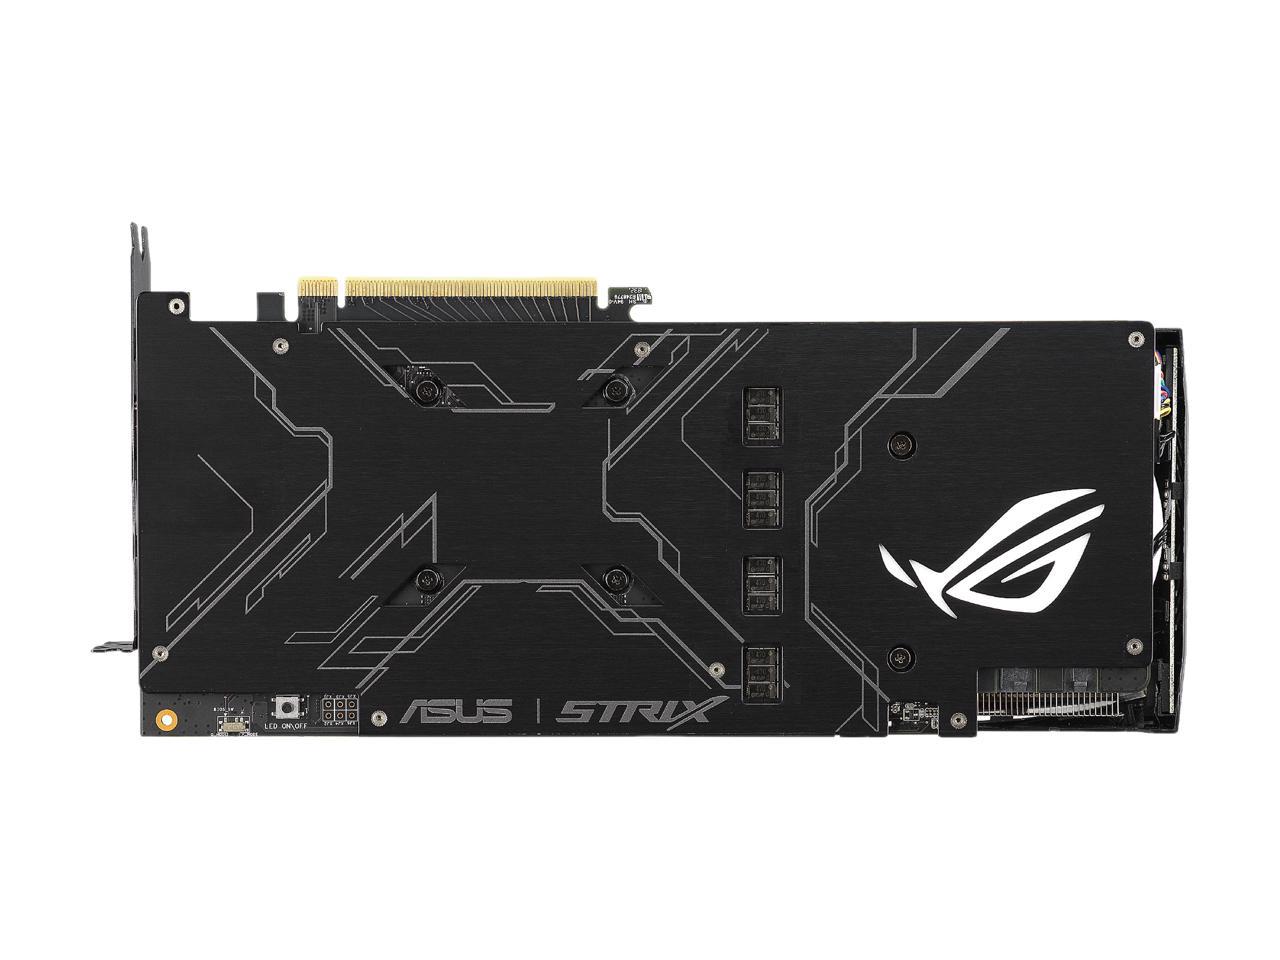 ASUS ROG Strix GeForce RTX 2070 DirectX 12 ROG-STRIX-RTX2070-A8G-GAMING 8GB 256-Bit GDDR6 PCI Express 3.0 HDCP Ready Video Card